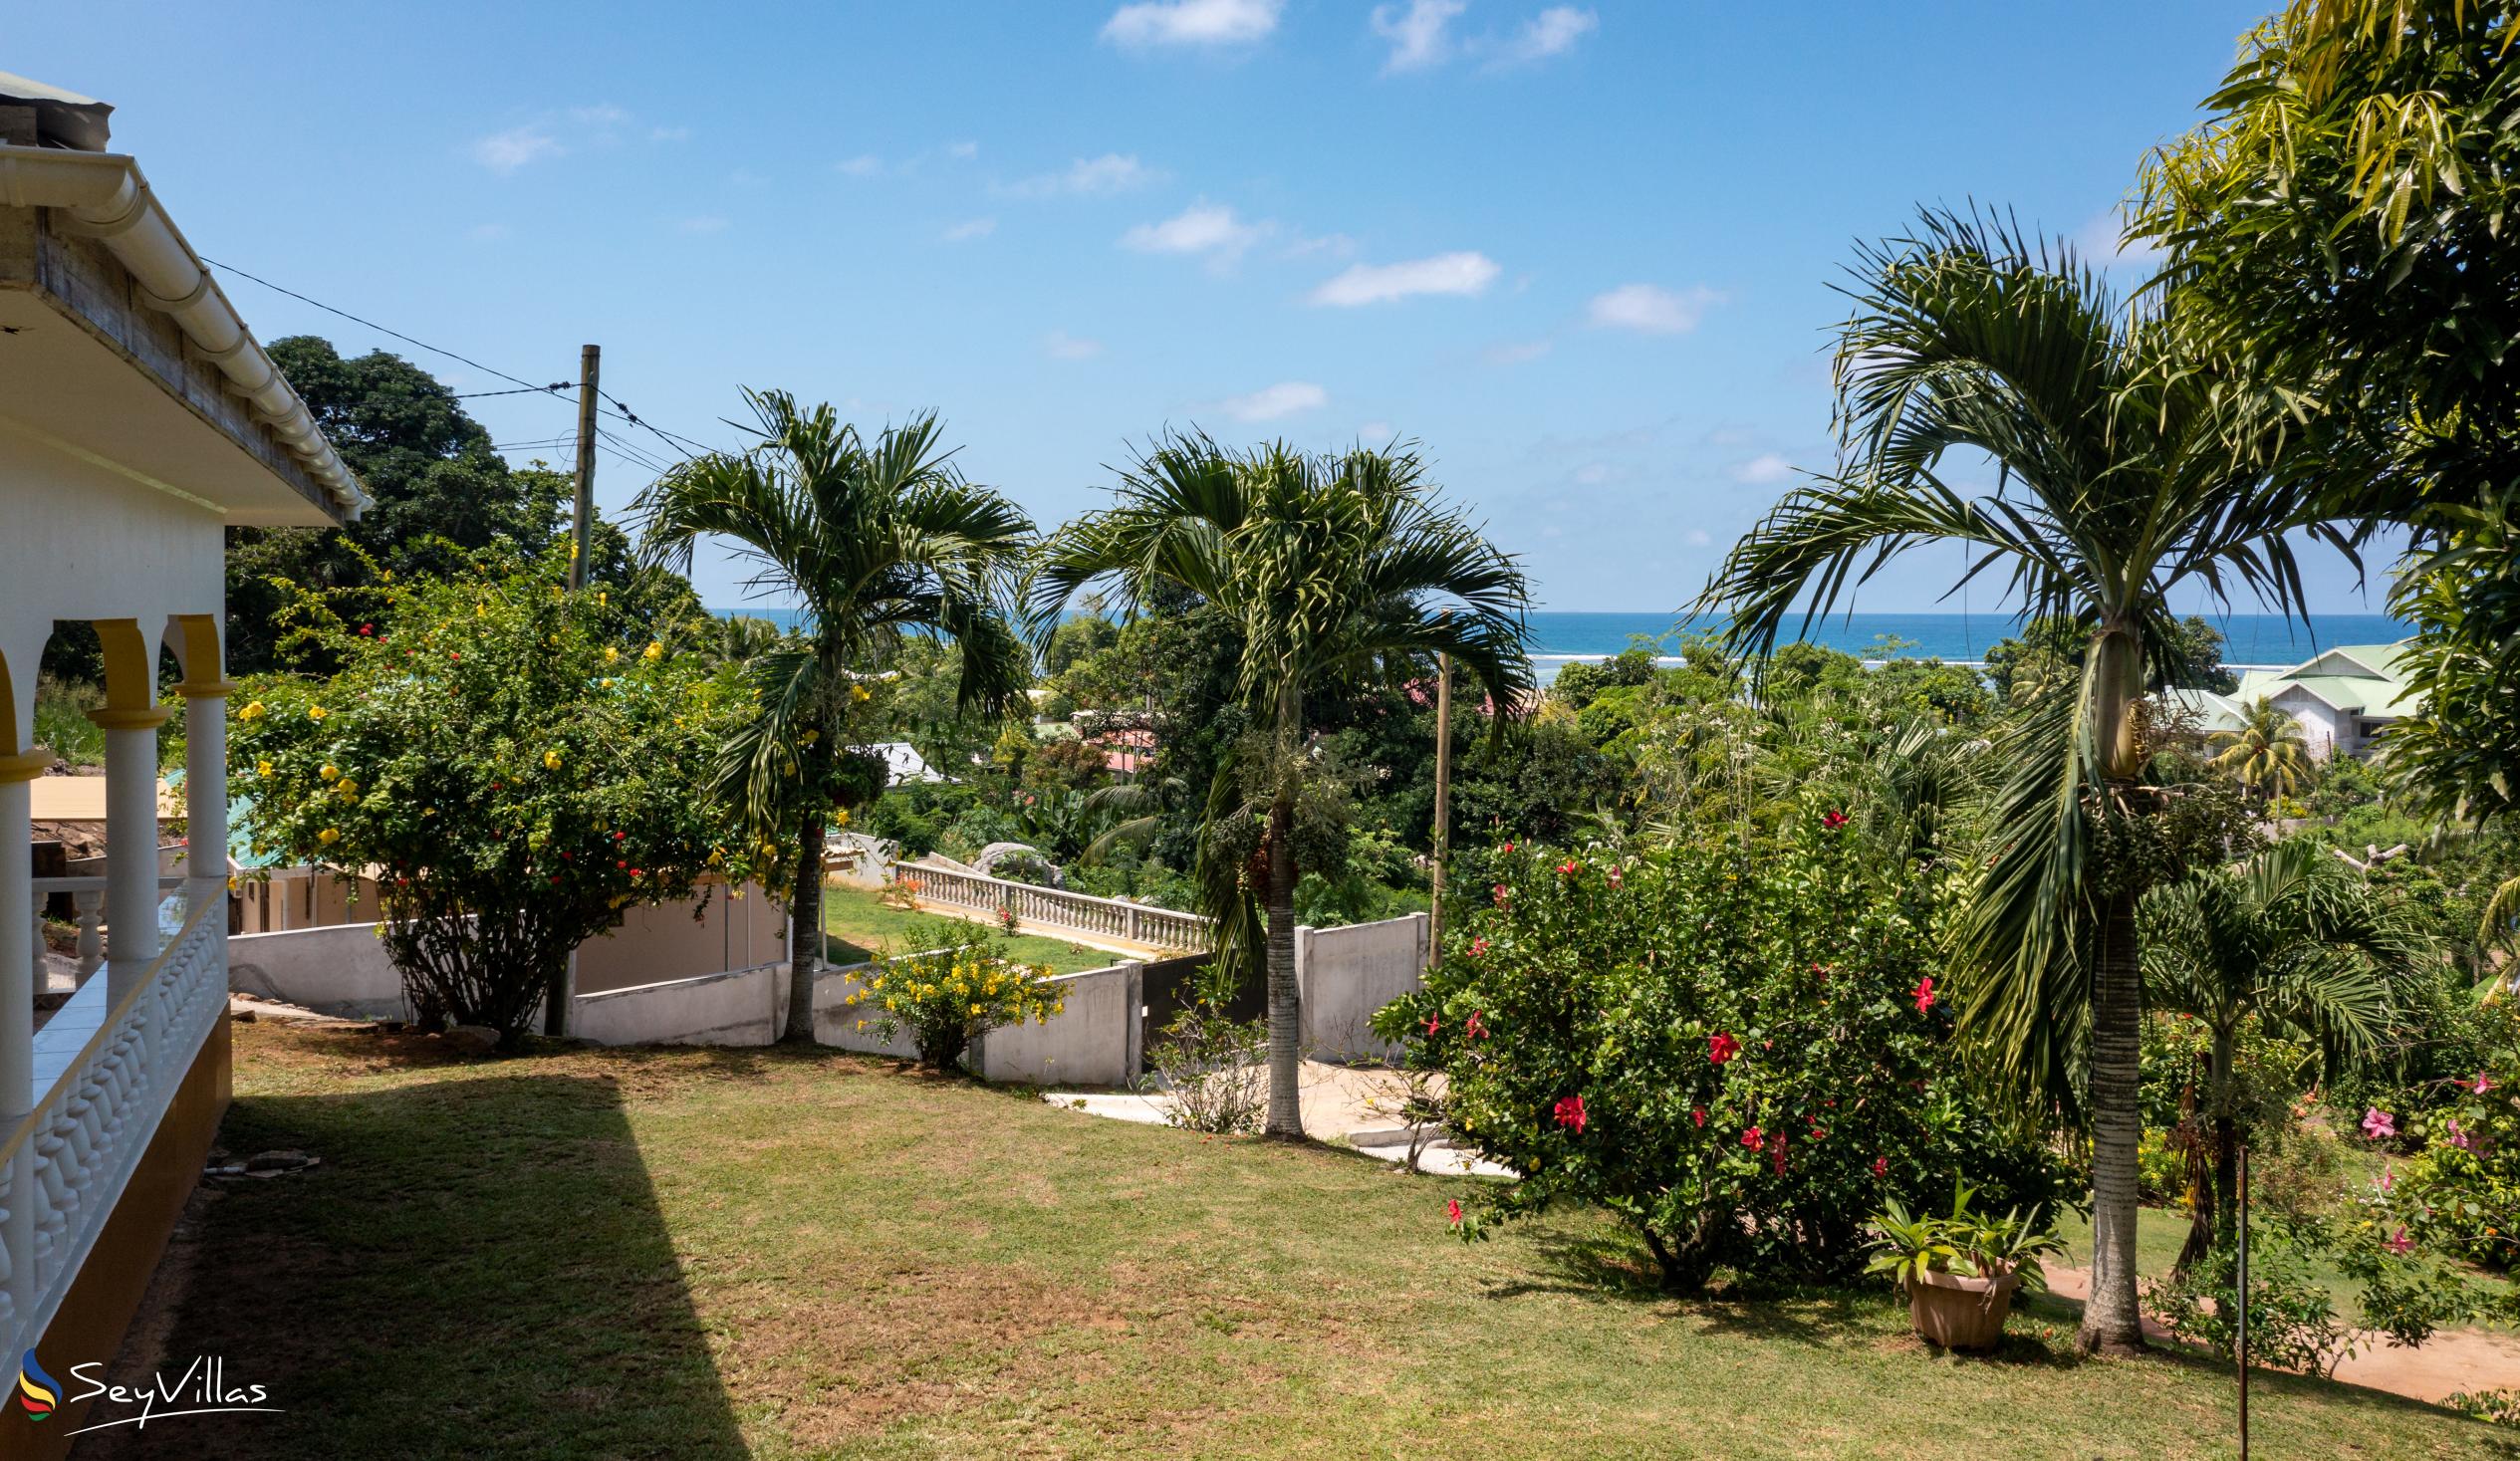 Foto 71: Maison Marikel - Villa mit 2 Schlafzimmern - Mahé (Seychellen)